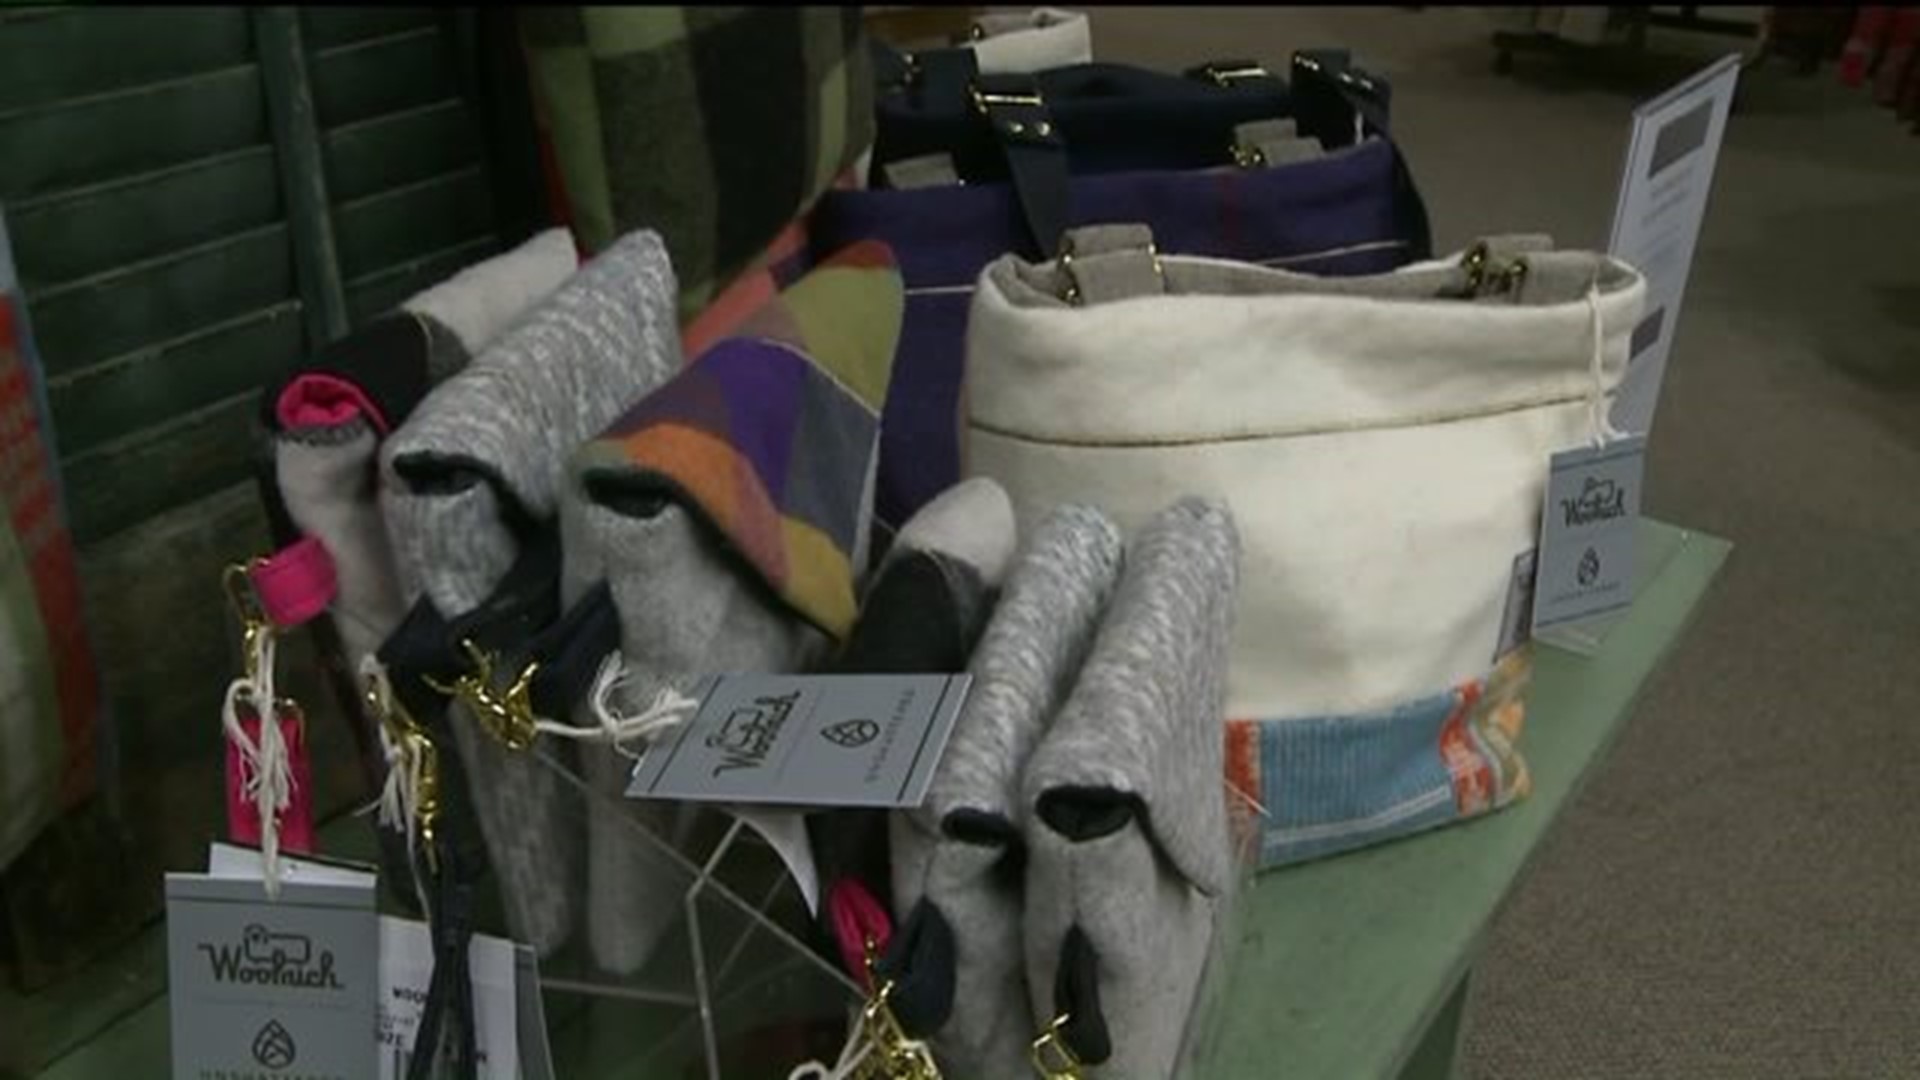 Repurposed Bags to Help Nonprofit